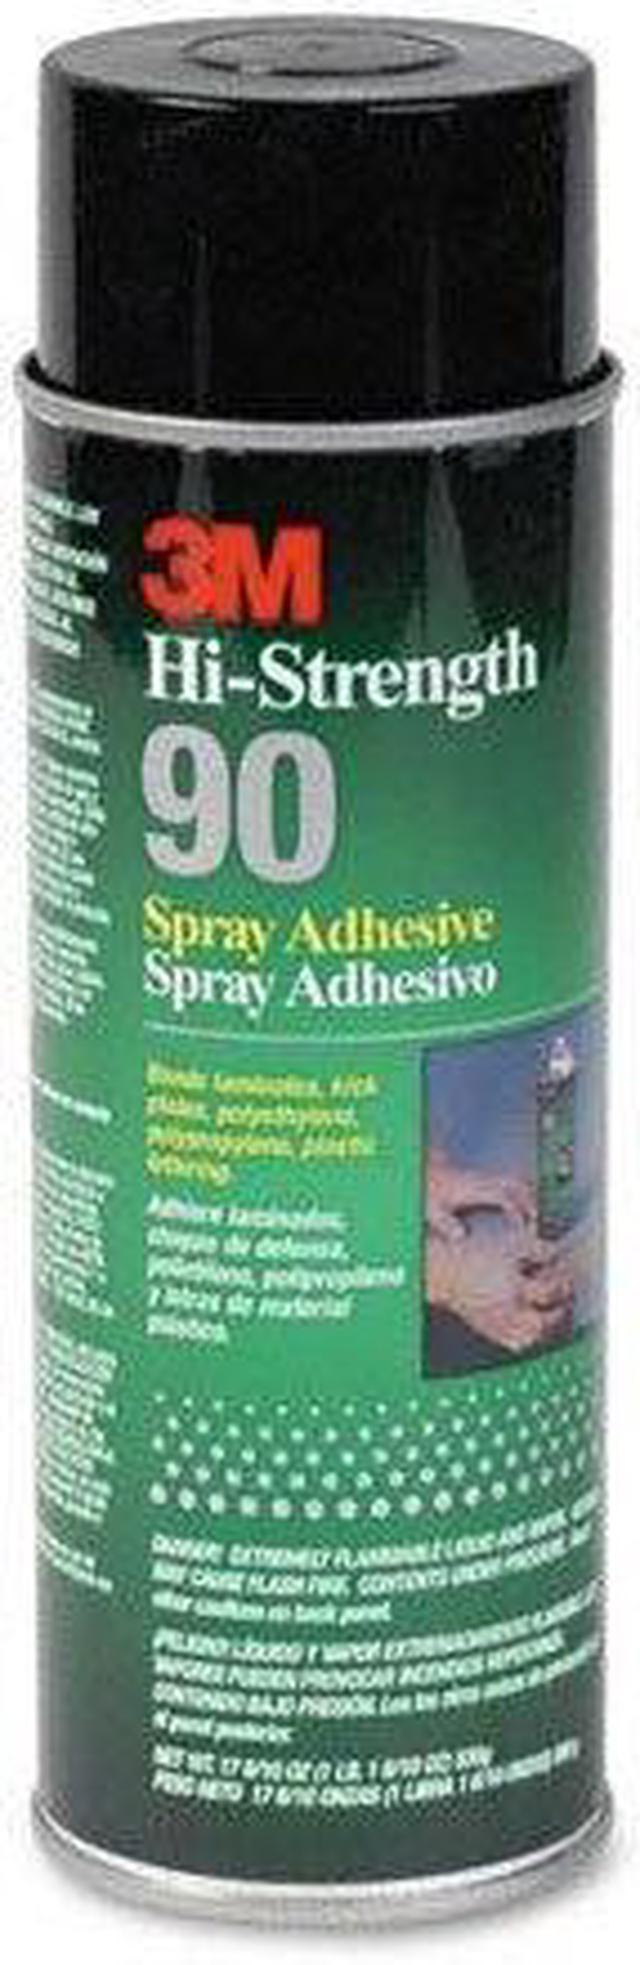 2 Pack 3M 90-24 Hi-Strength 90 Spray Adhesive - 17-1/2-oz Net Wt (3002 –